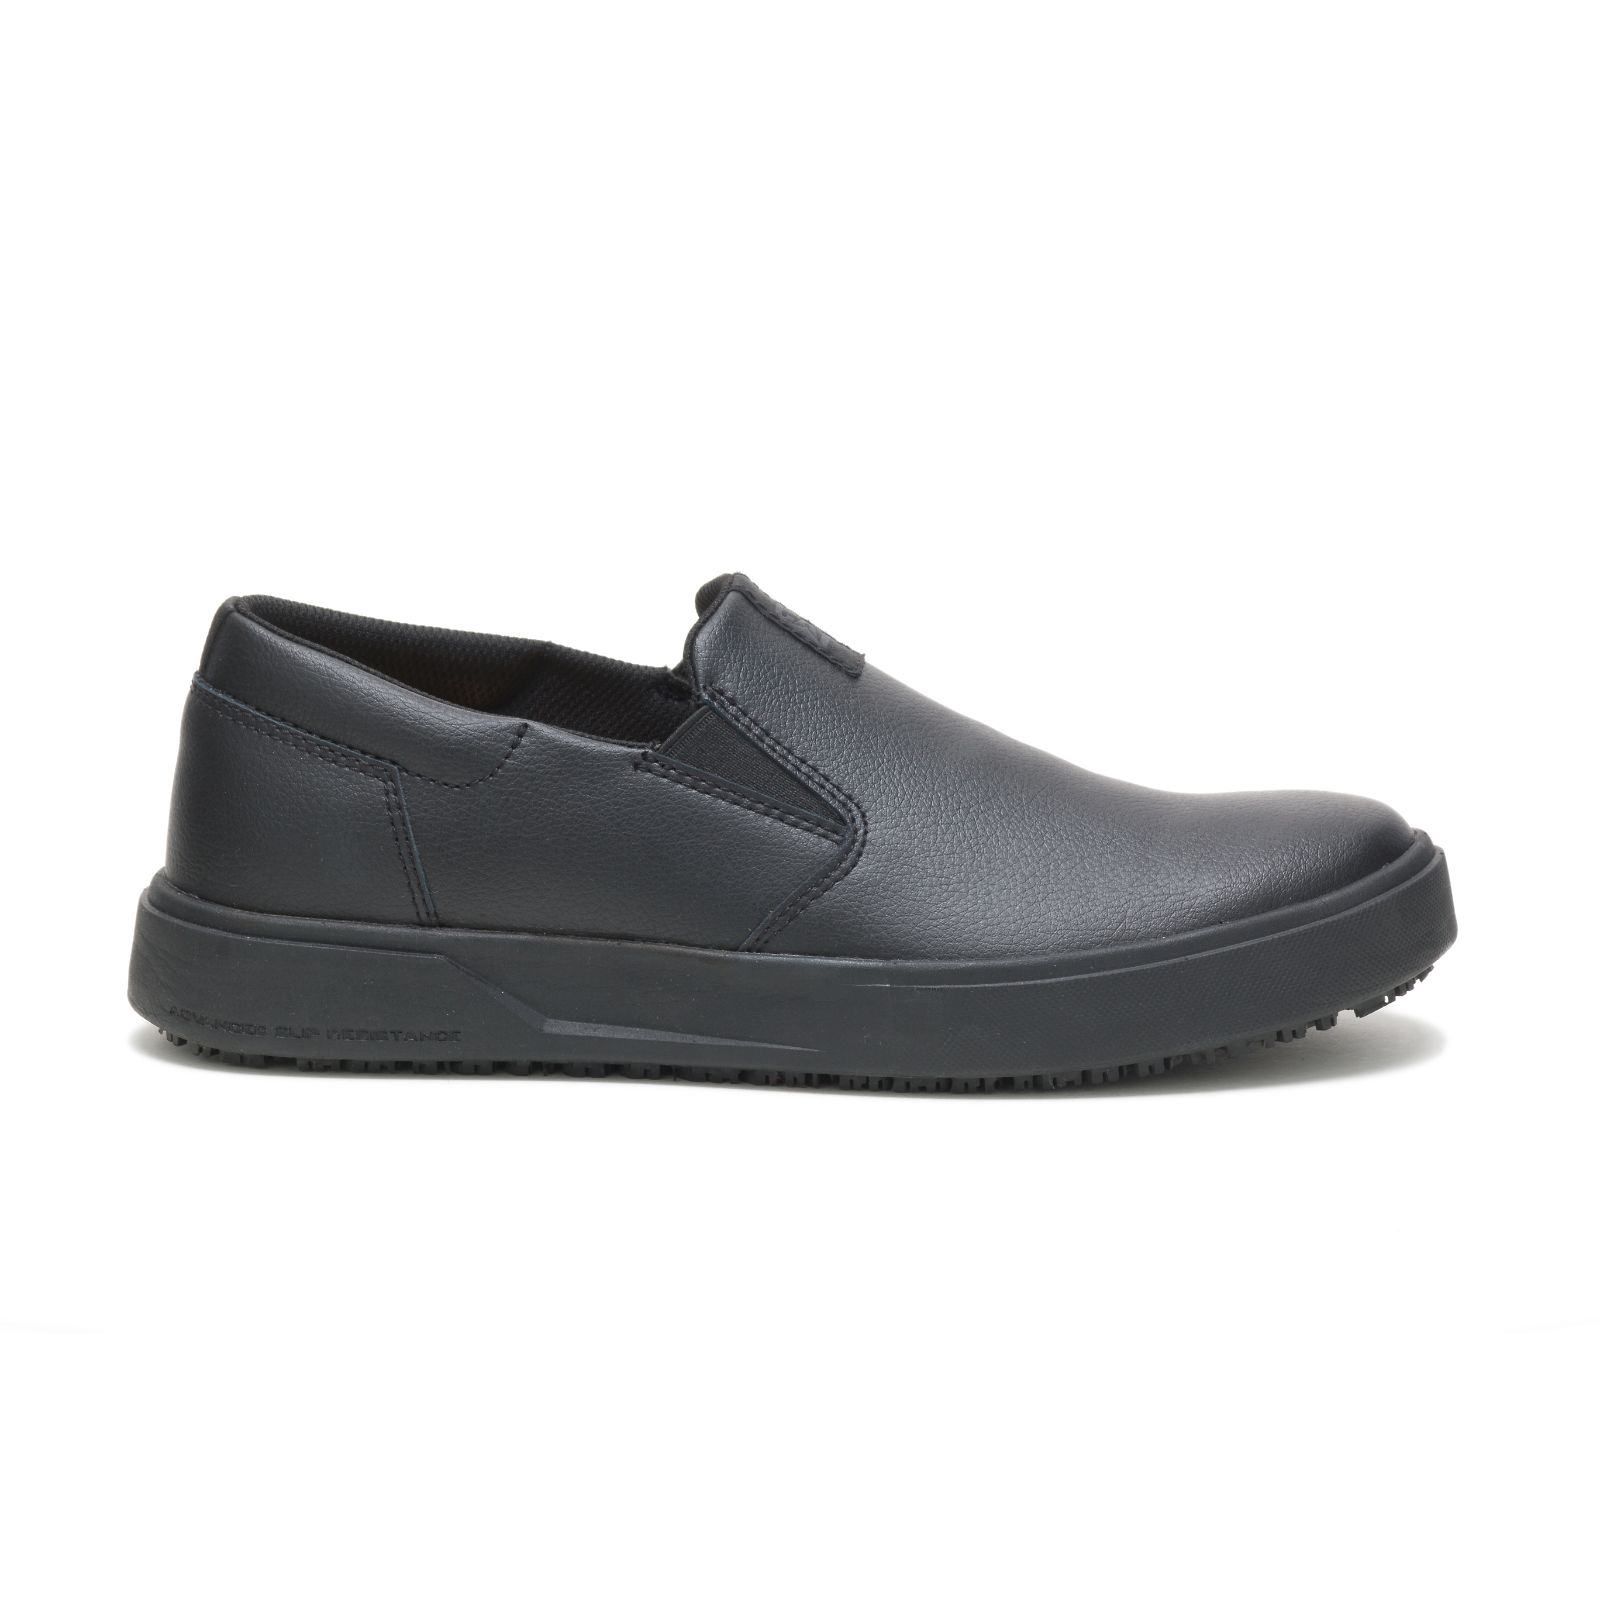 Caterpillar Shoes Pakistan - Caterpillar Prorush Sr+ Slip-on Mens Work Shoes Black (687351-PMQ)